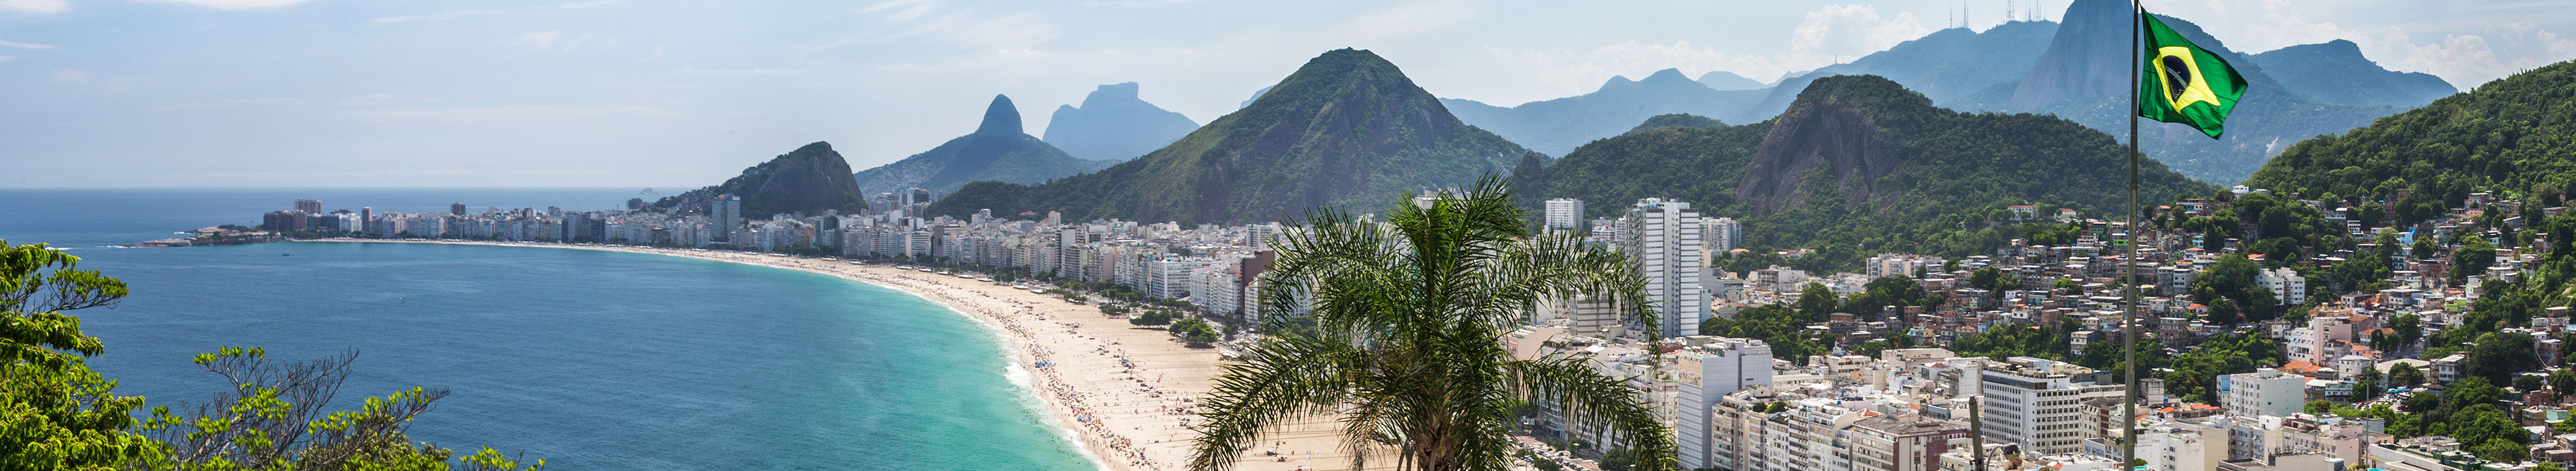 Blick auf den Strand von Copacabana, Rio de Janeiro, Brasilien